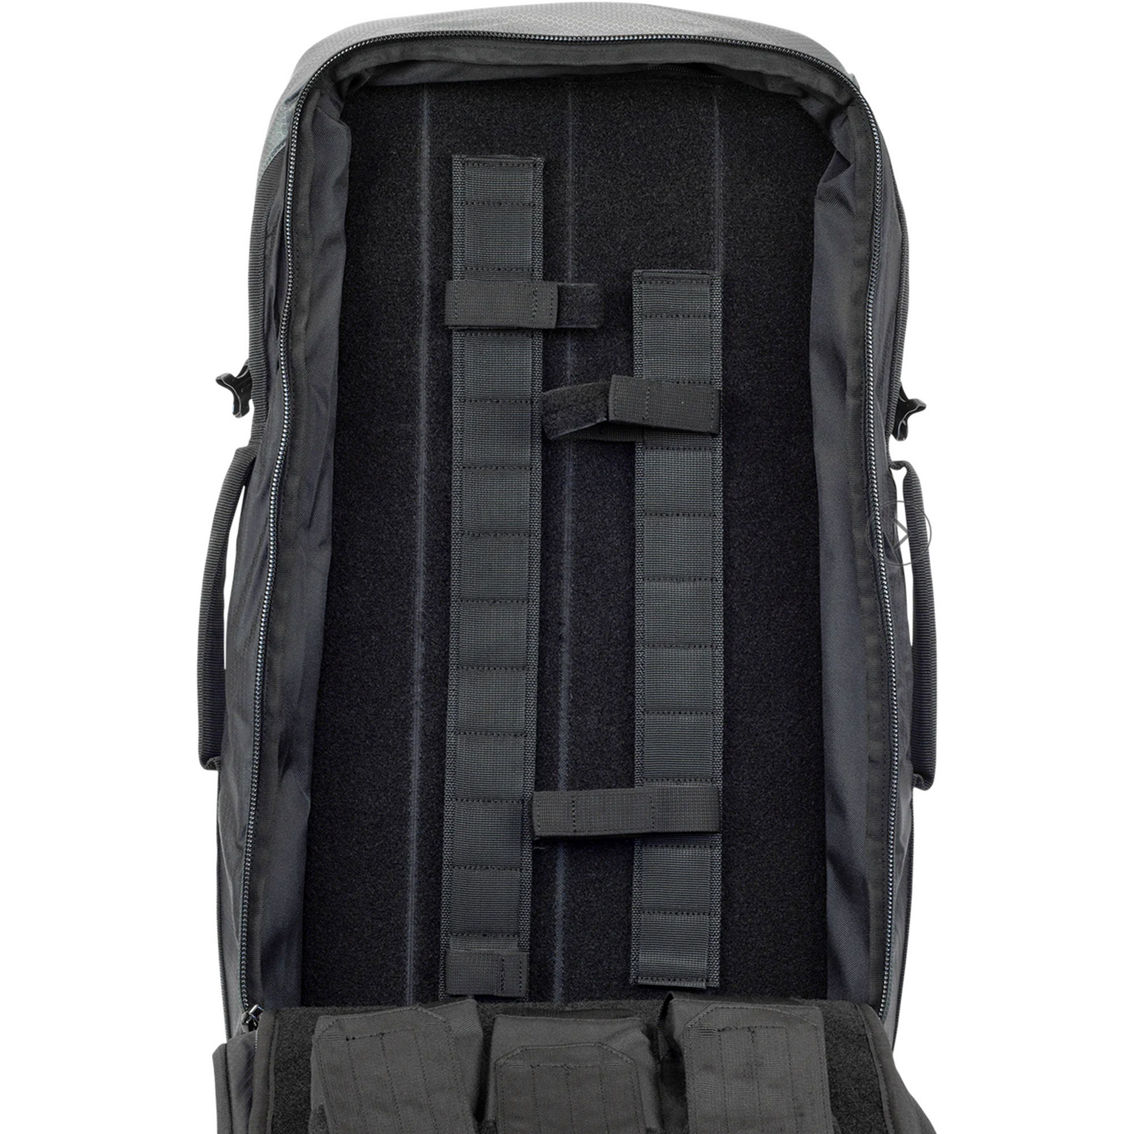 Elite Survival Summit Discreet Rifle Backpack - Image 6 of 7